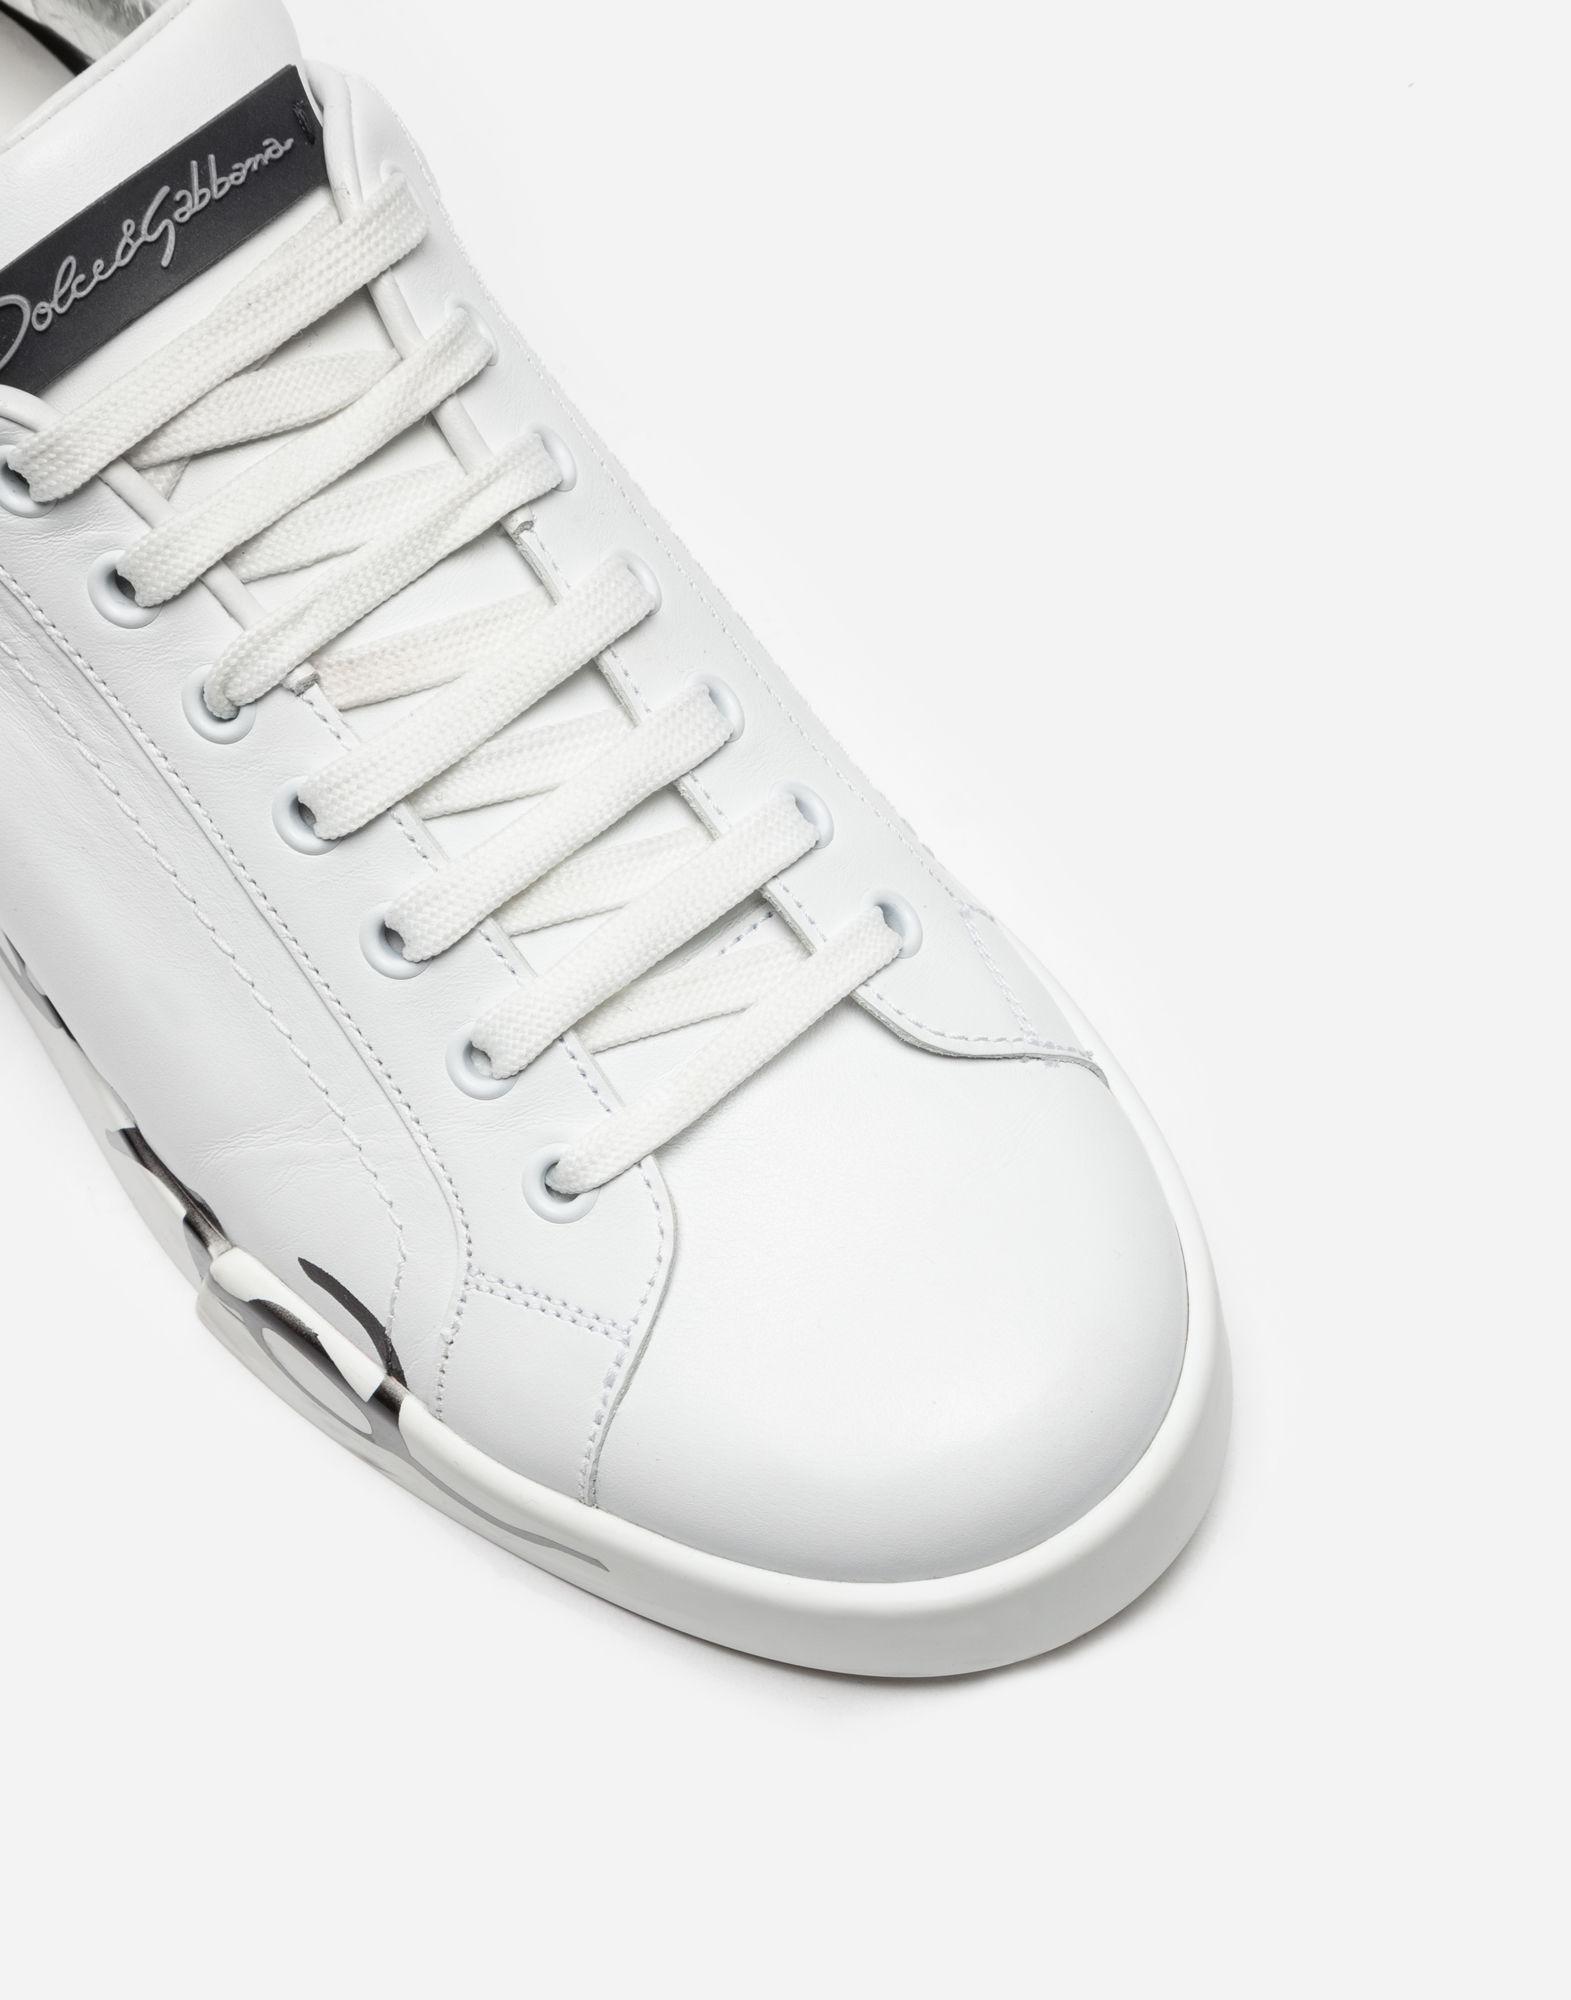 Dolce & Gabbana Portofino Sneakers In Leather And Patent in White 